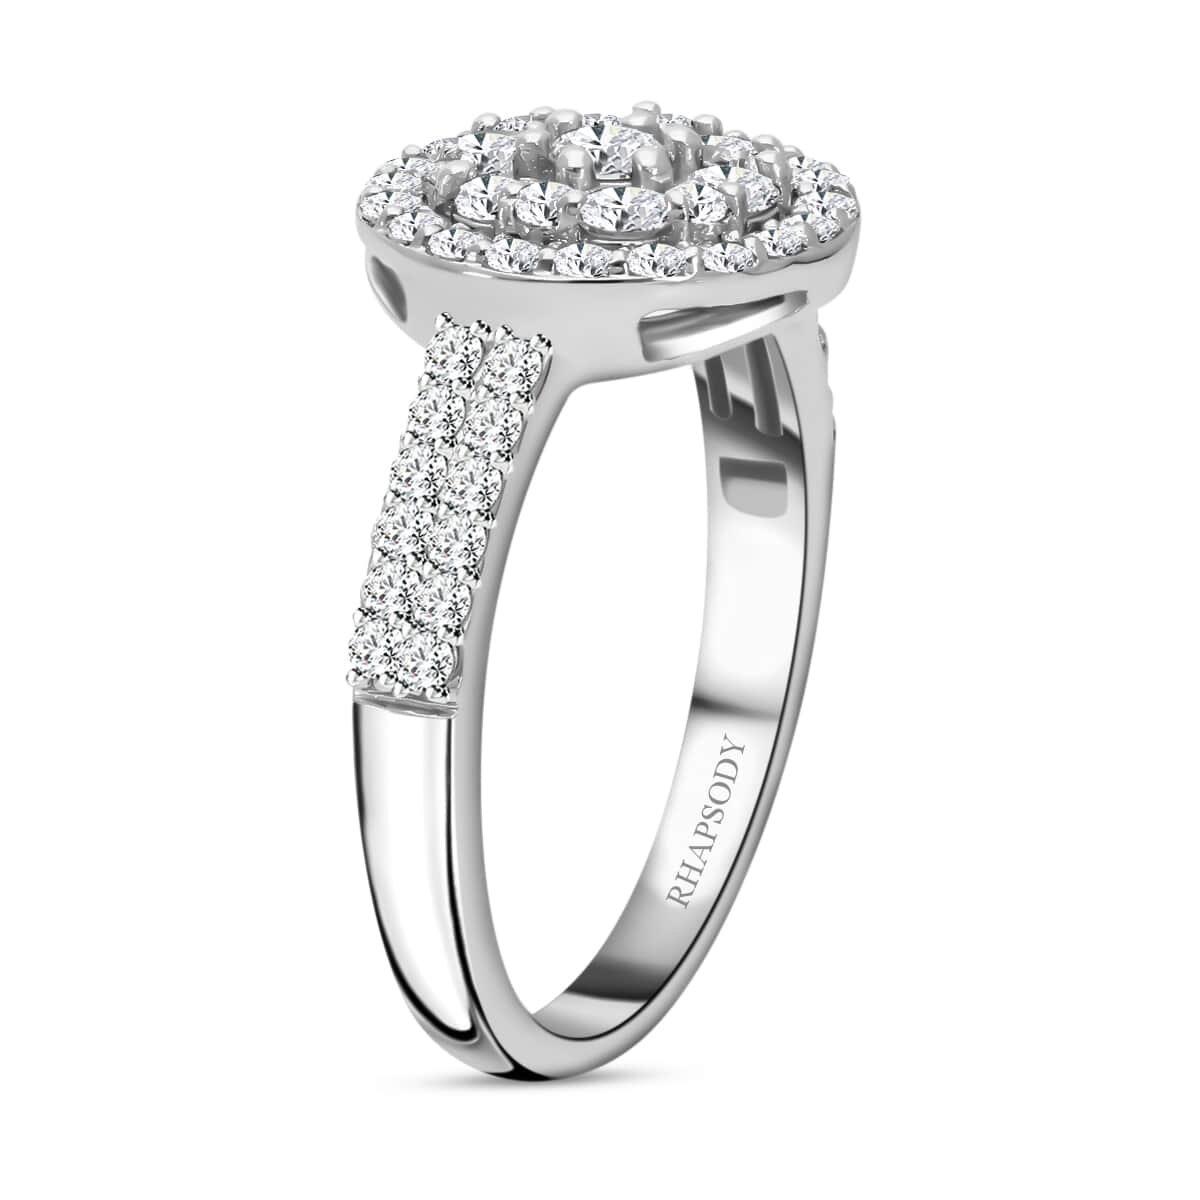 Rhapsody 950 Platinum IGI Certified Diamond Ring (Size 7.0) 5.75 Grams 1.00 ctw image number 3